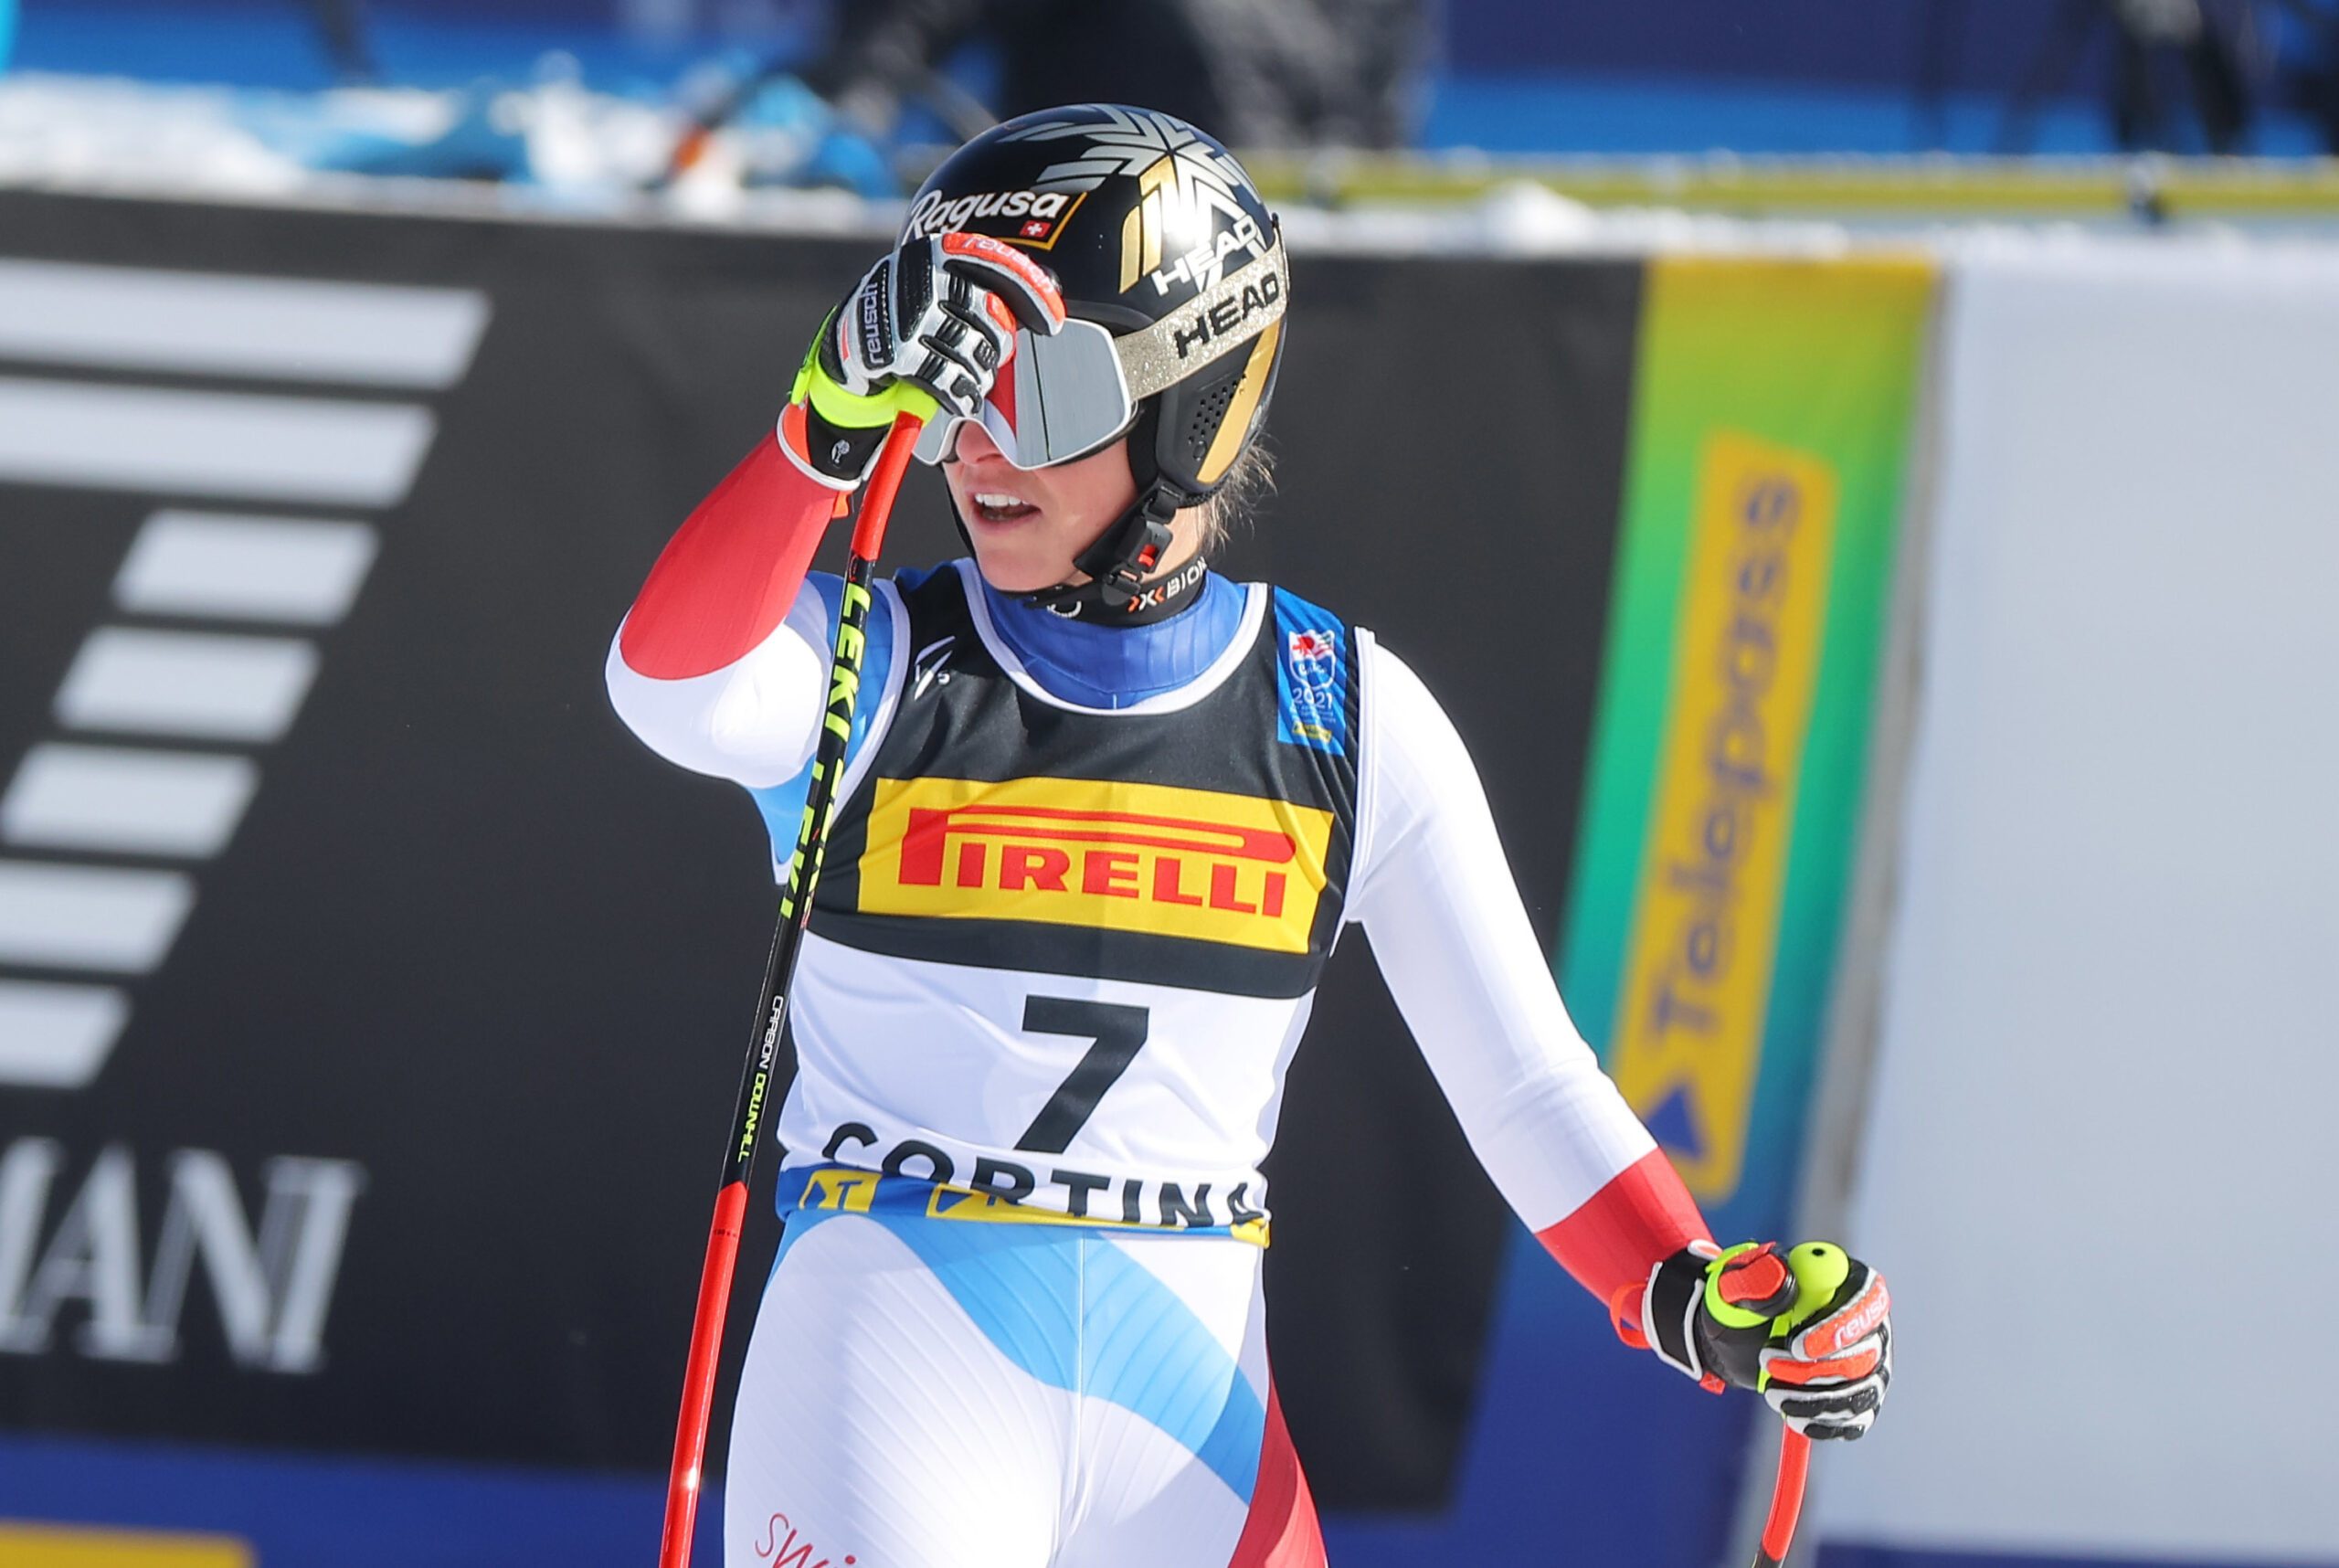 CORTINA D AMPEZZO,ITALY,11.FEB.21 - ALPINE SKIING - FIS Alpine World Ski Championships, Super G, ladies. Image shows the rejoicing of Lara Gut-Behrami (SUI).